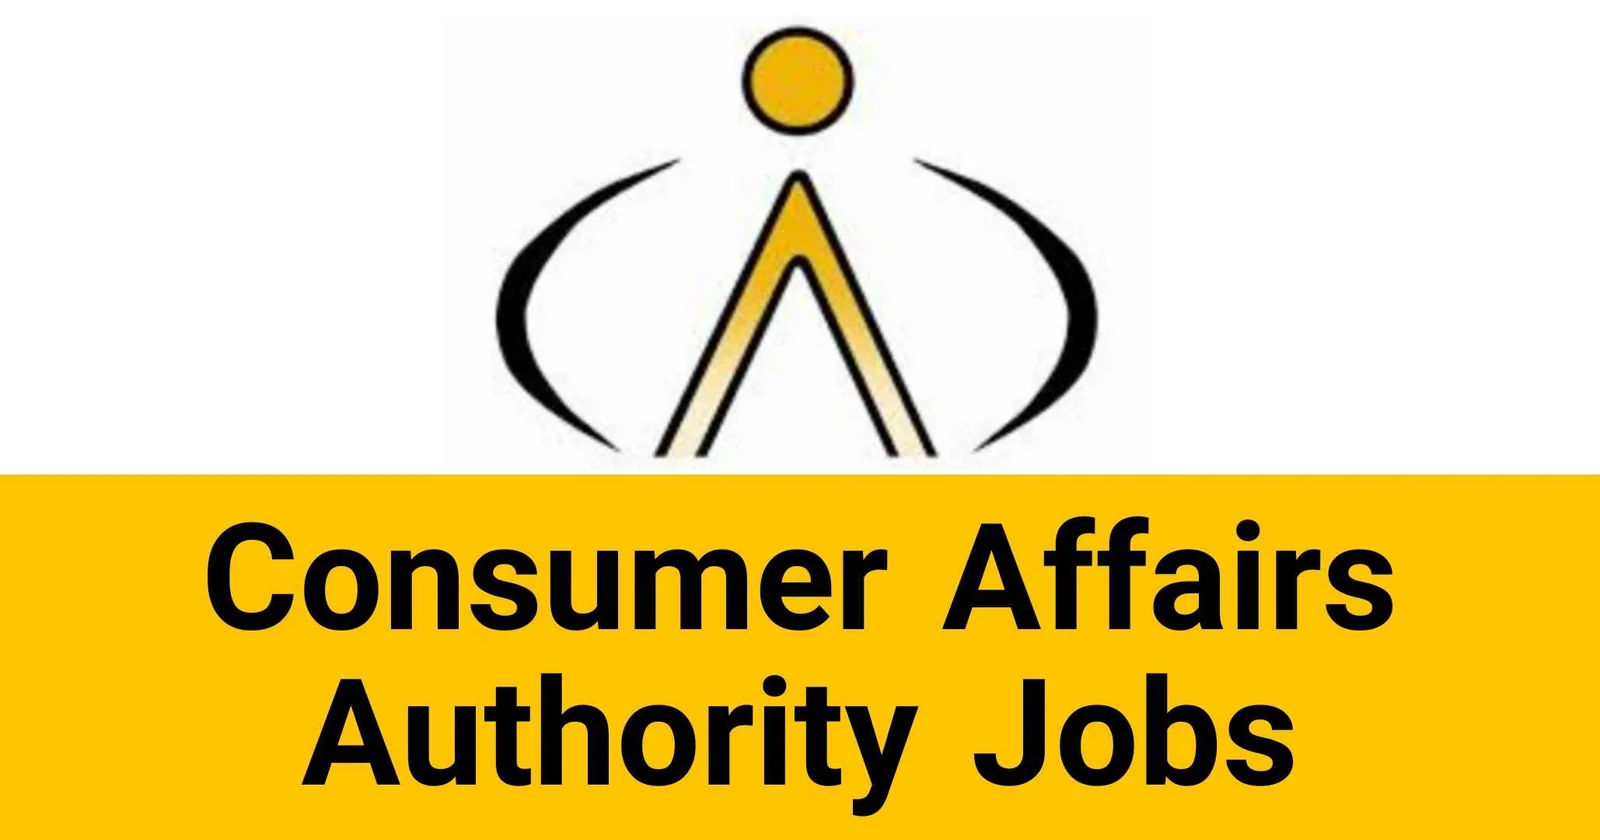 Consumer Affairs Authority Jobs Vacancies Recruitments Applications